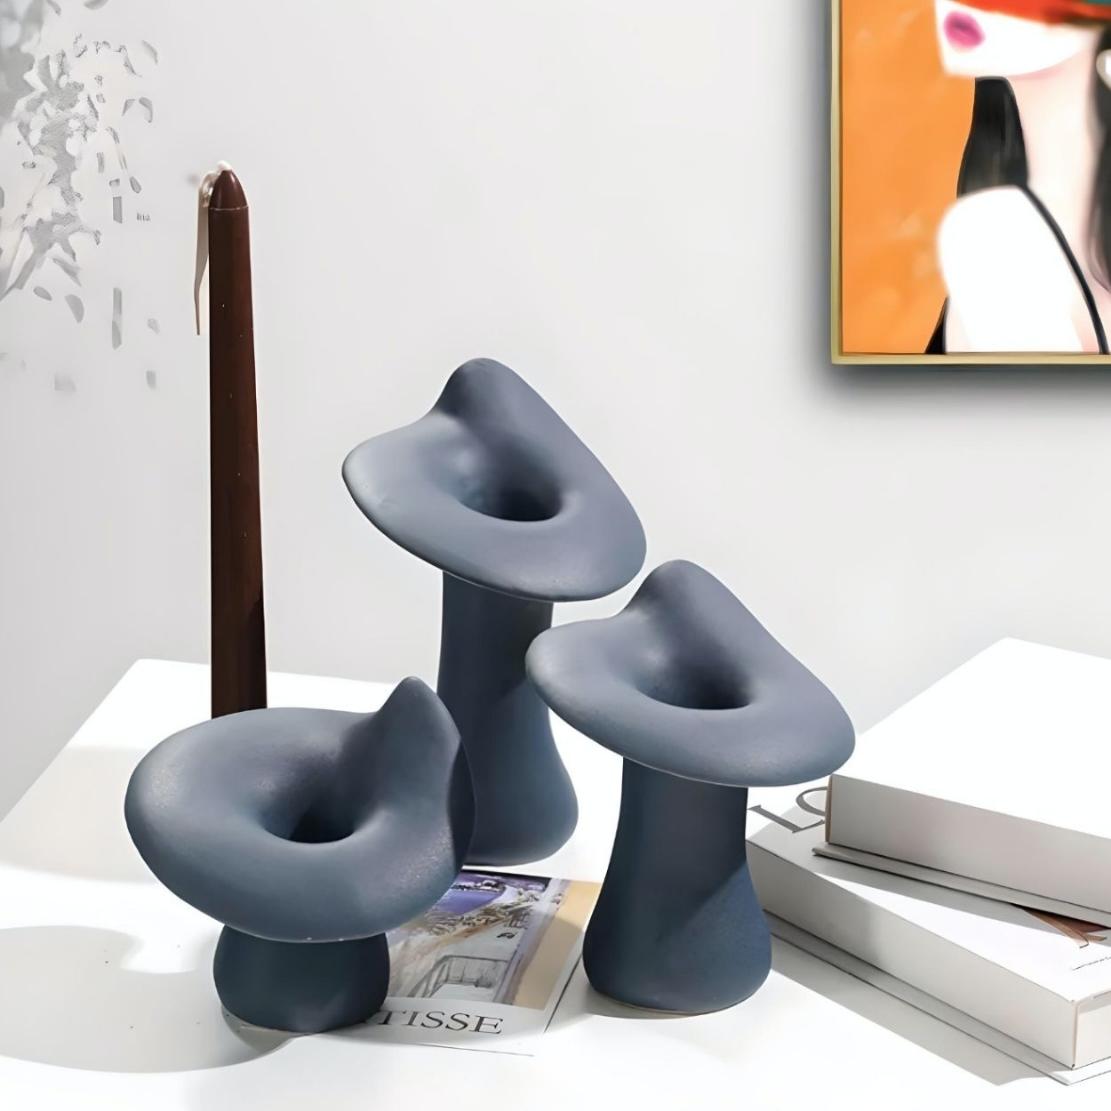 Blue, ceramic mushroom candlestick holders